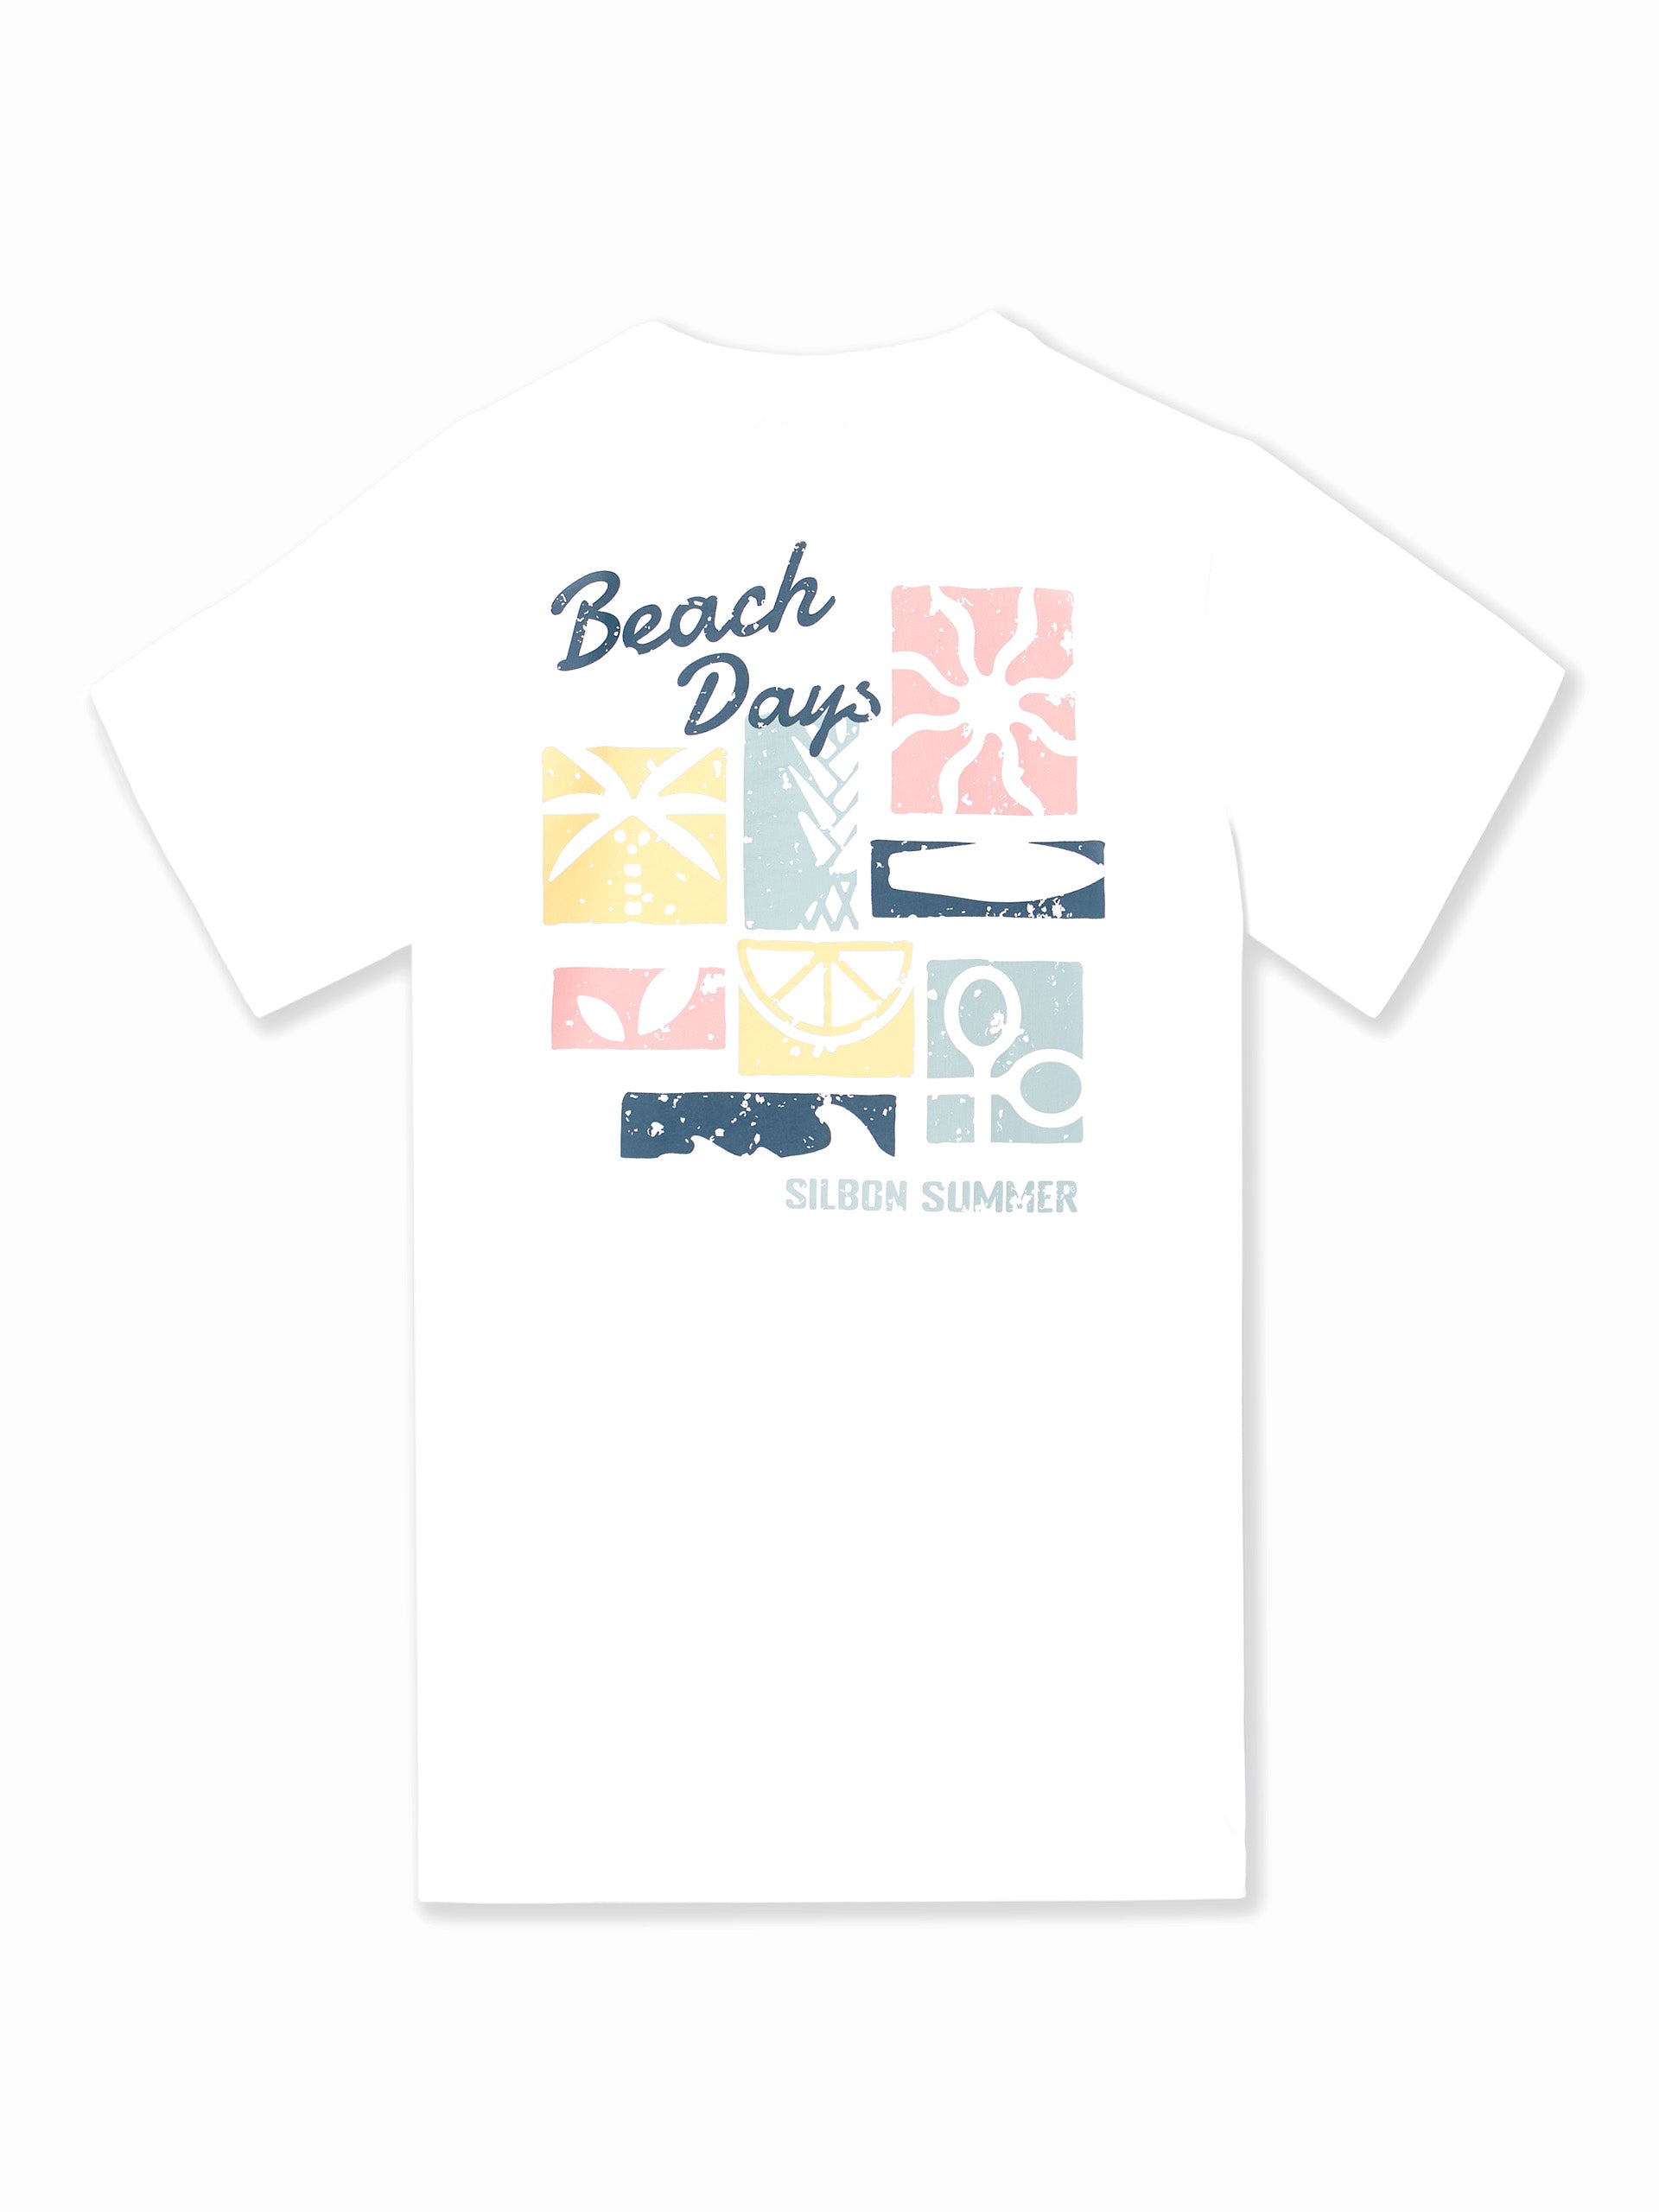 White beach days t-shirt